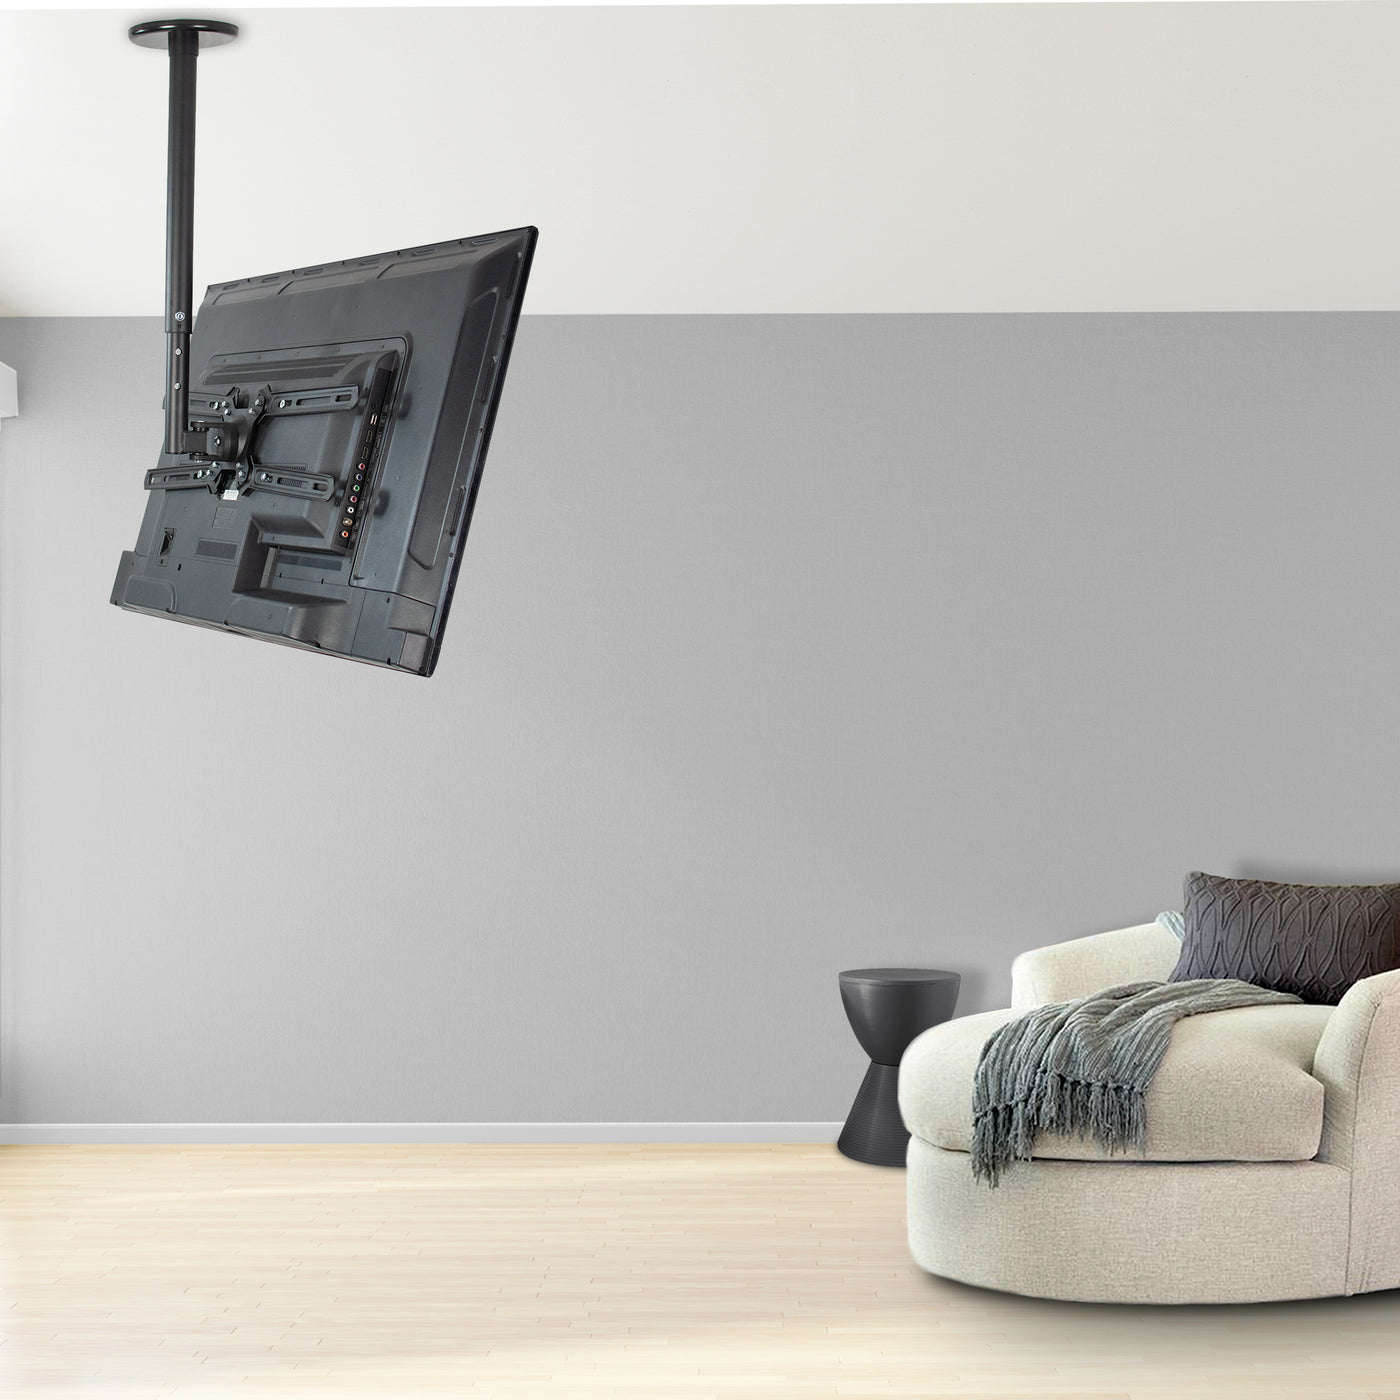 Heavy-duty height adjustable TV ceiling mount.